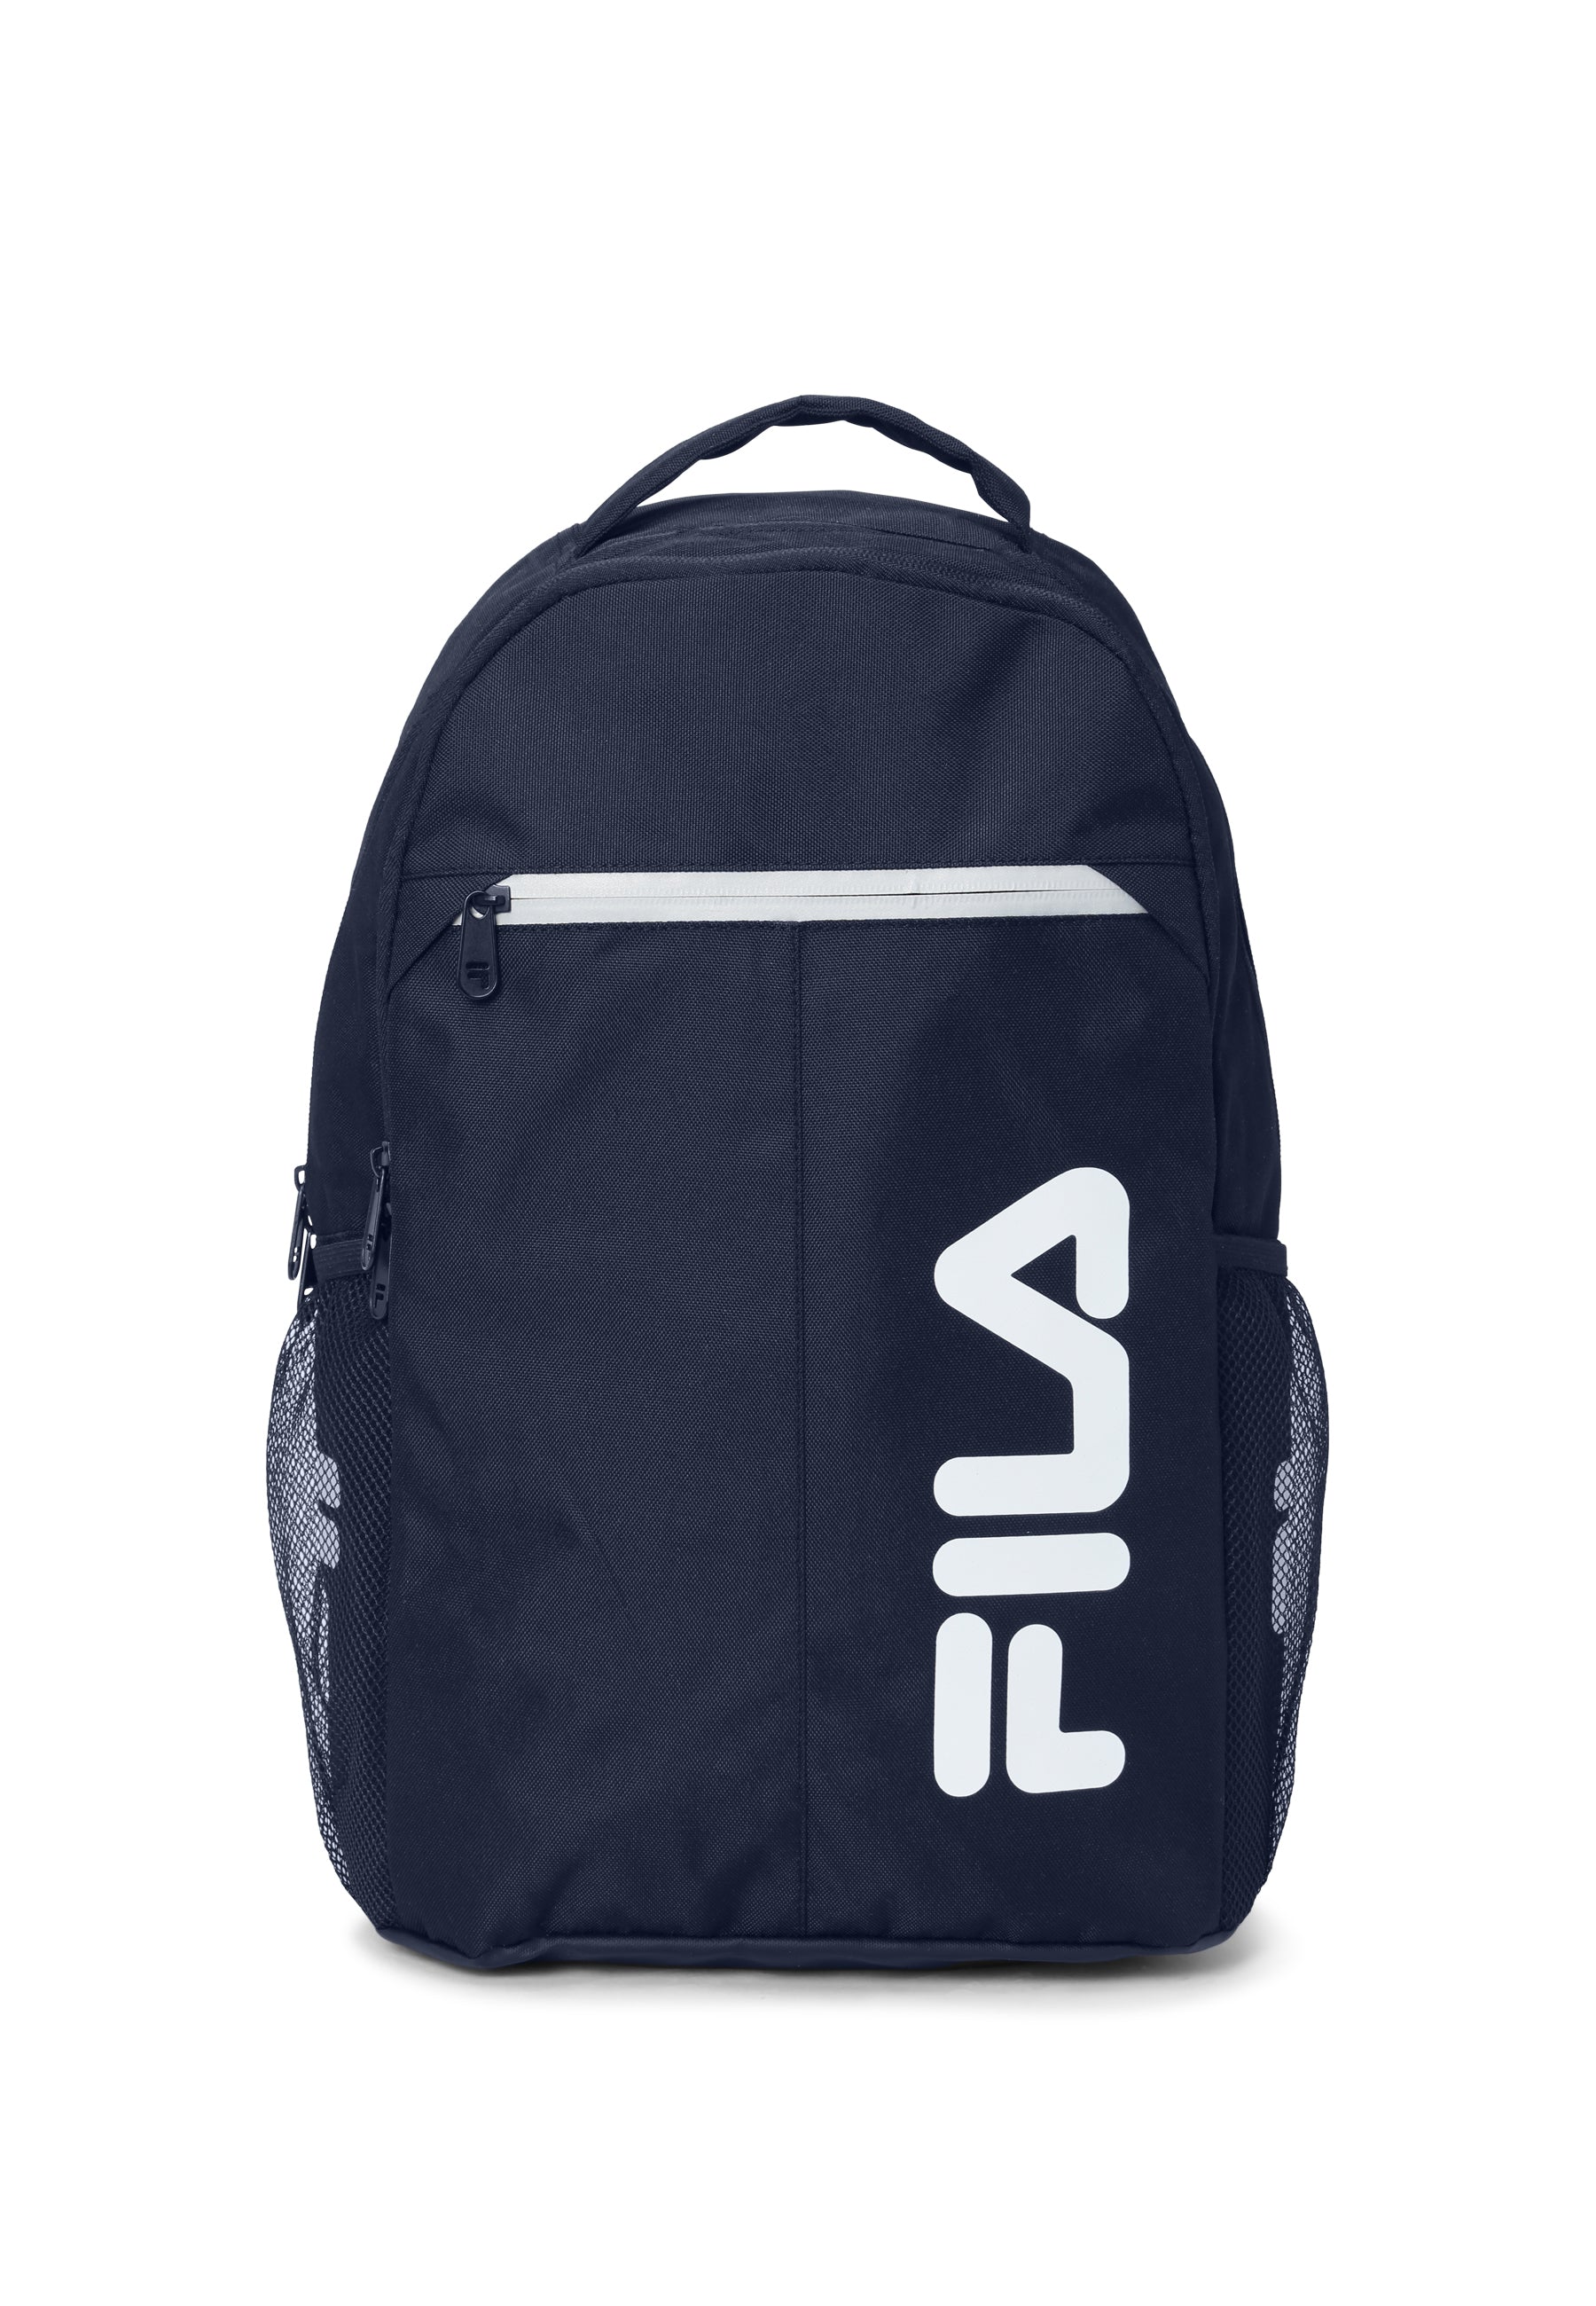 Folsom Active Vertical Backpack in Black Iris Rucksäcke Fila   